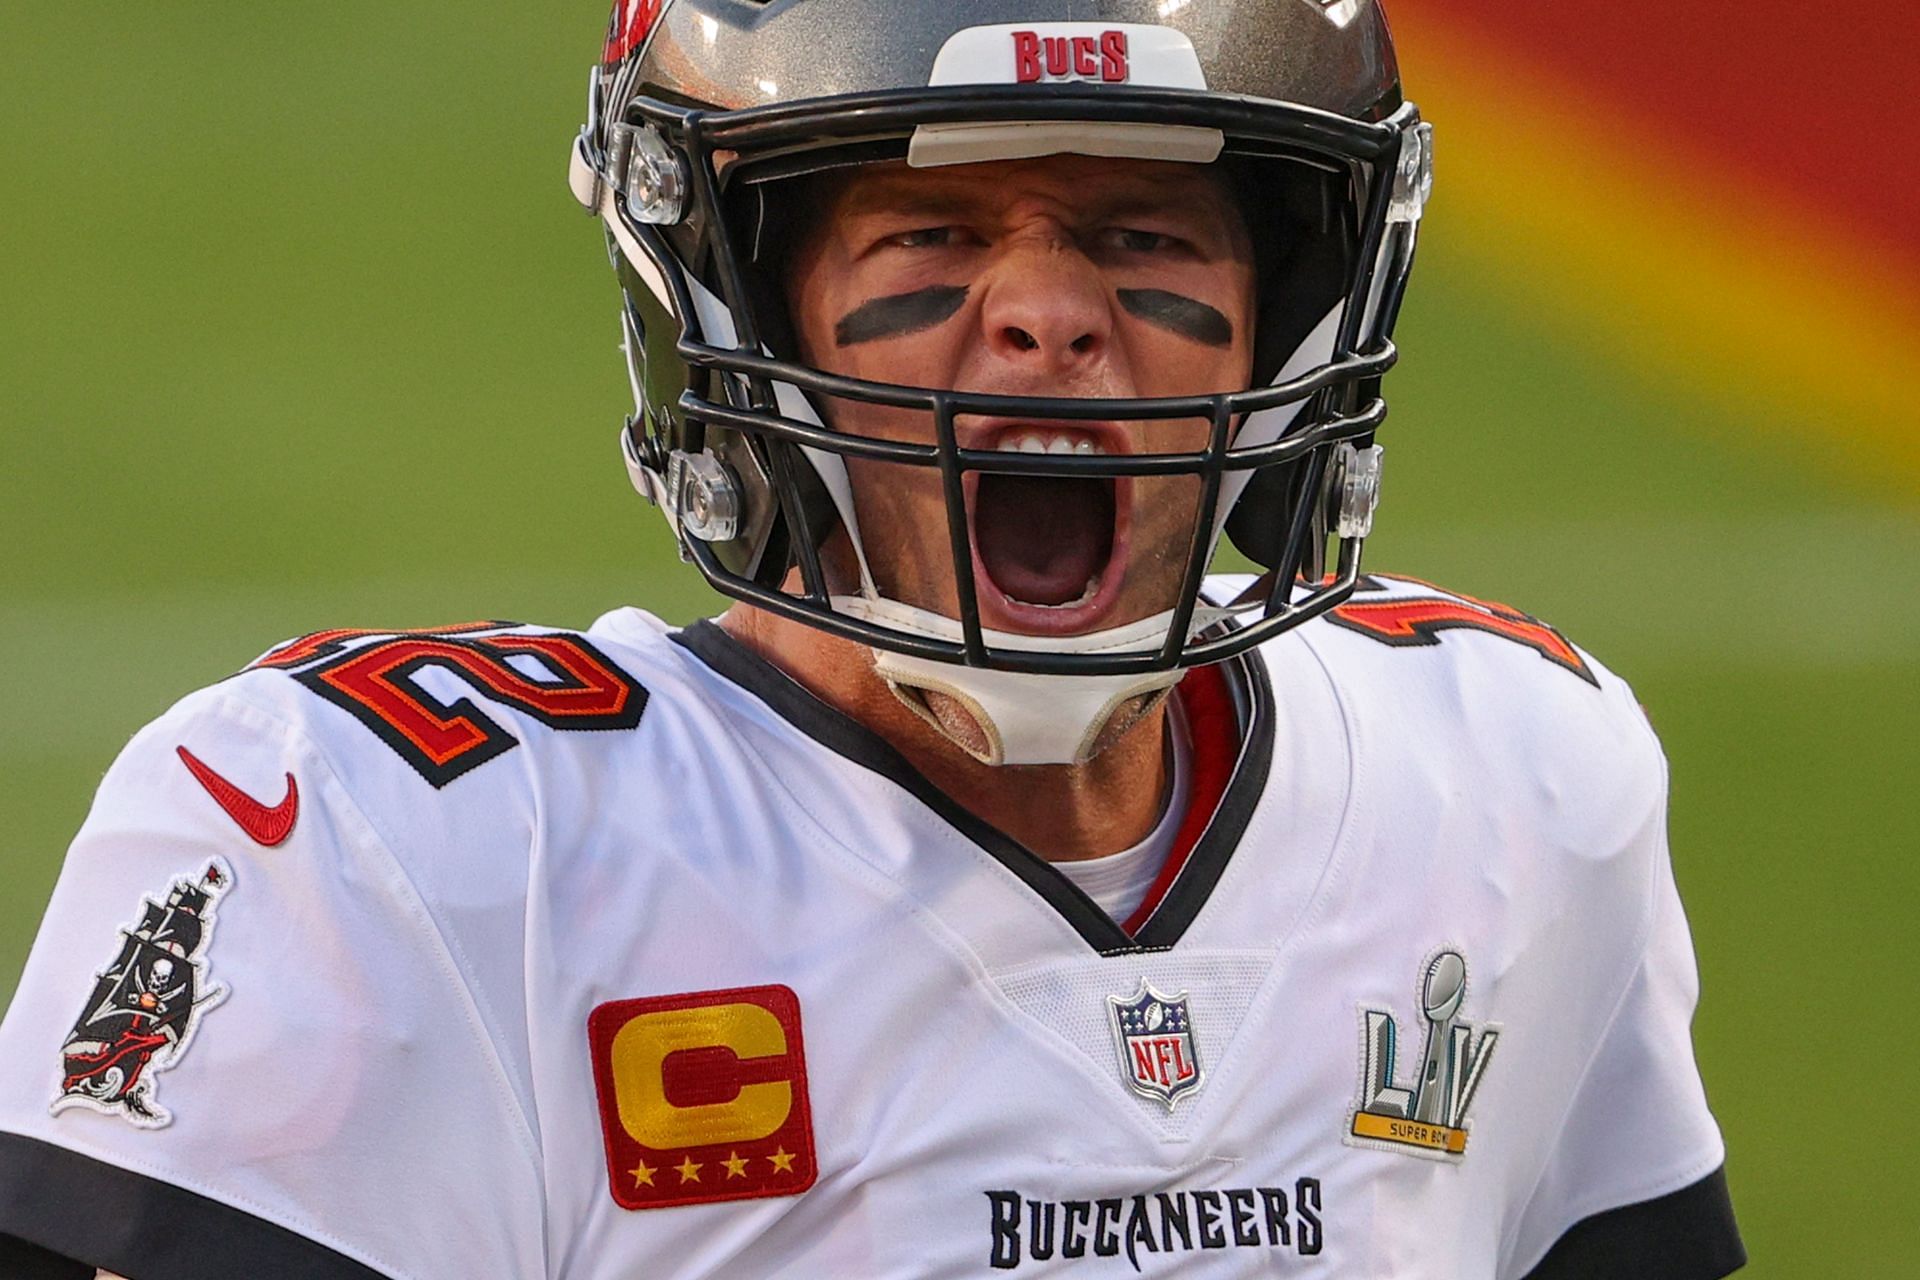 Unfinished business LFG' - Tom Brady unretires, announces sensational NFL  comeback